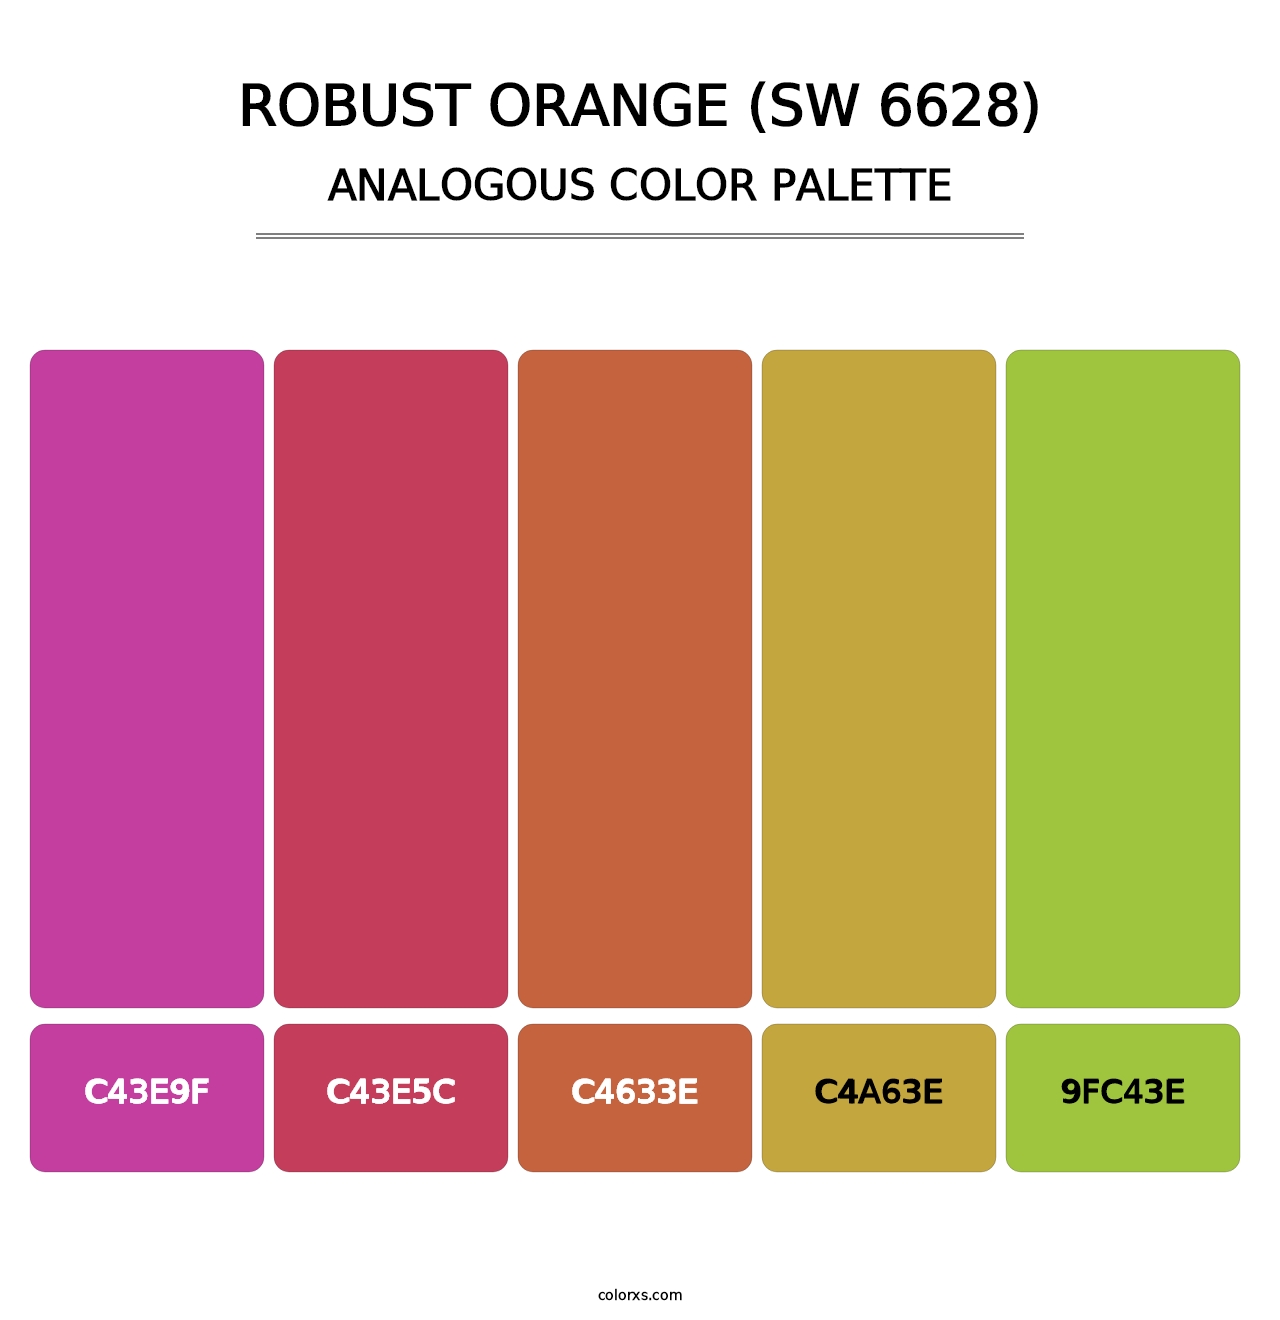 Robust Orange (SW 6628) - Analogous Color Palette